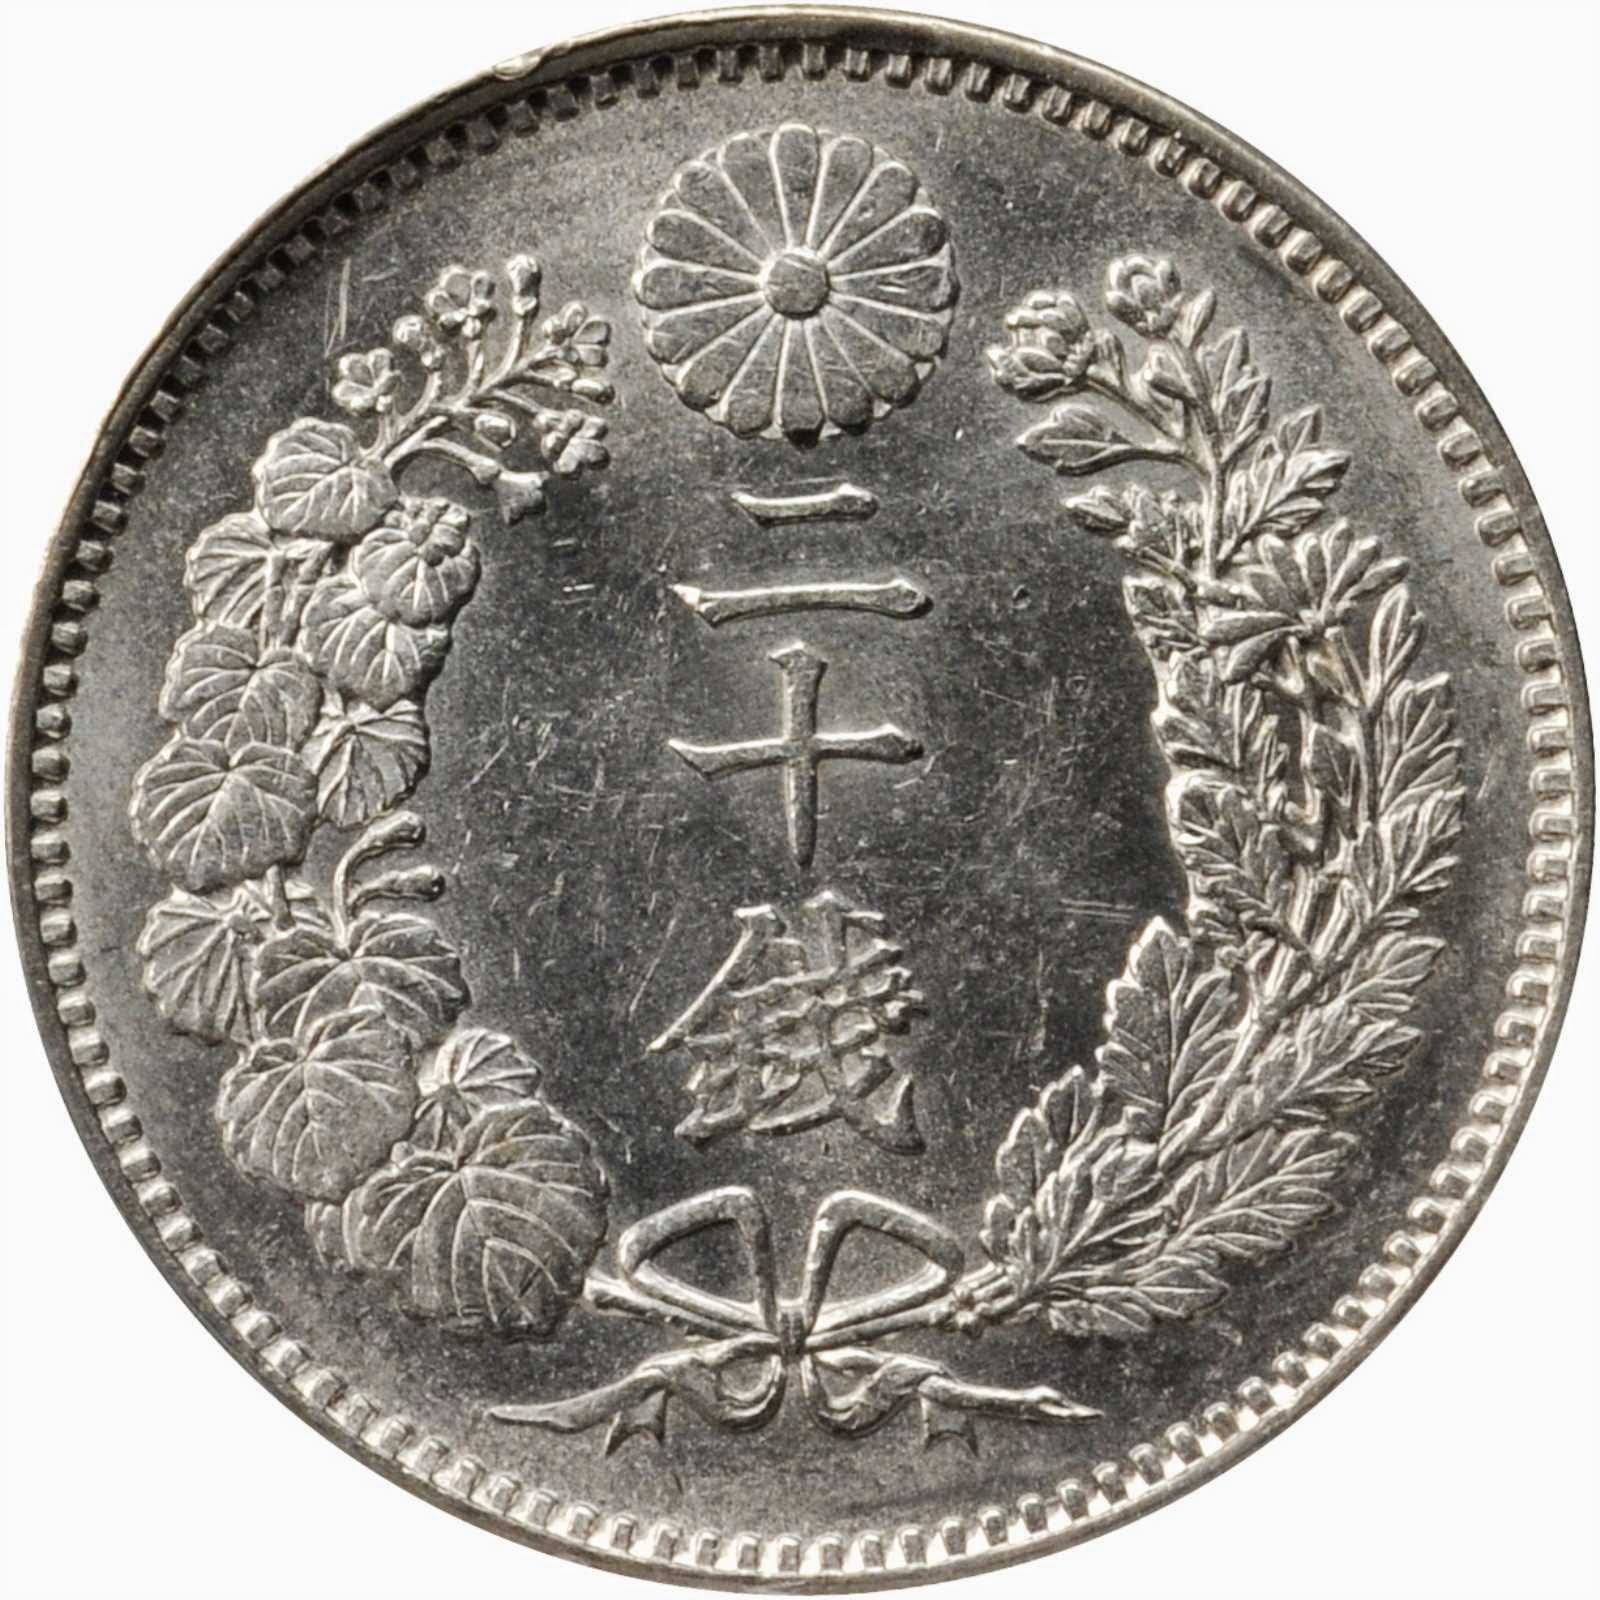 Japan 20 Sen Silver Coin Meiji